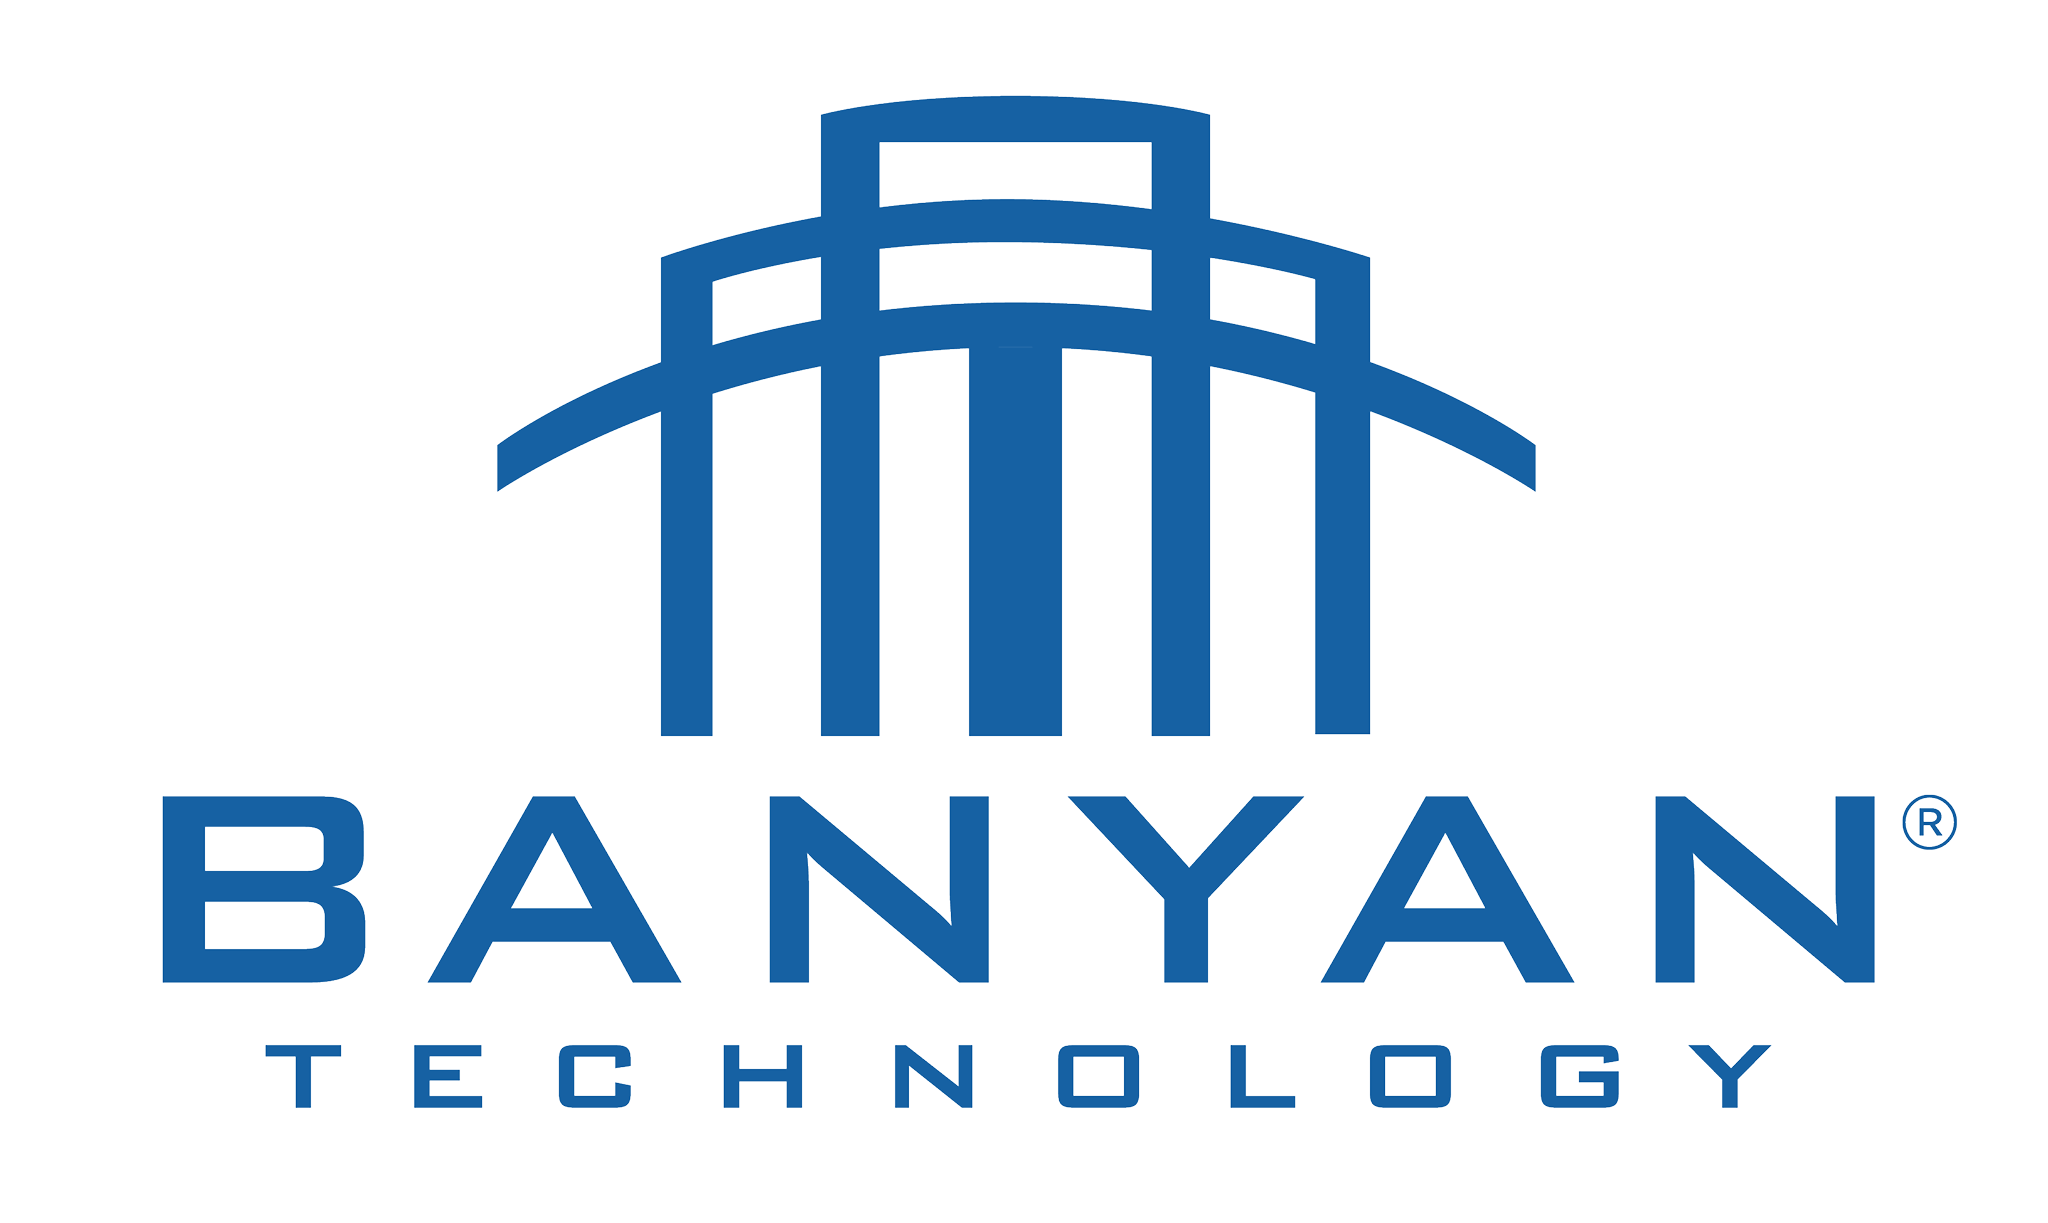 Banyan Technology Company Logo